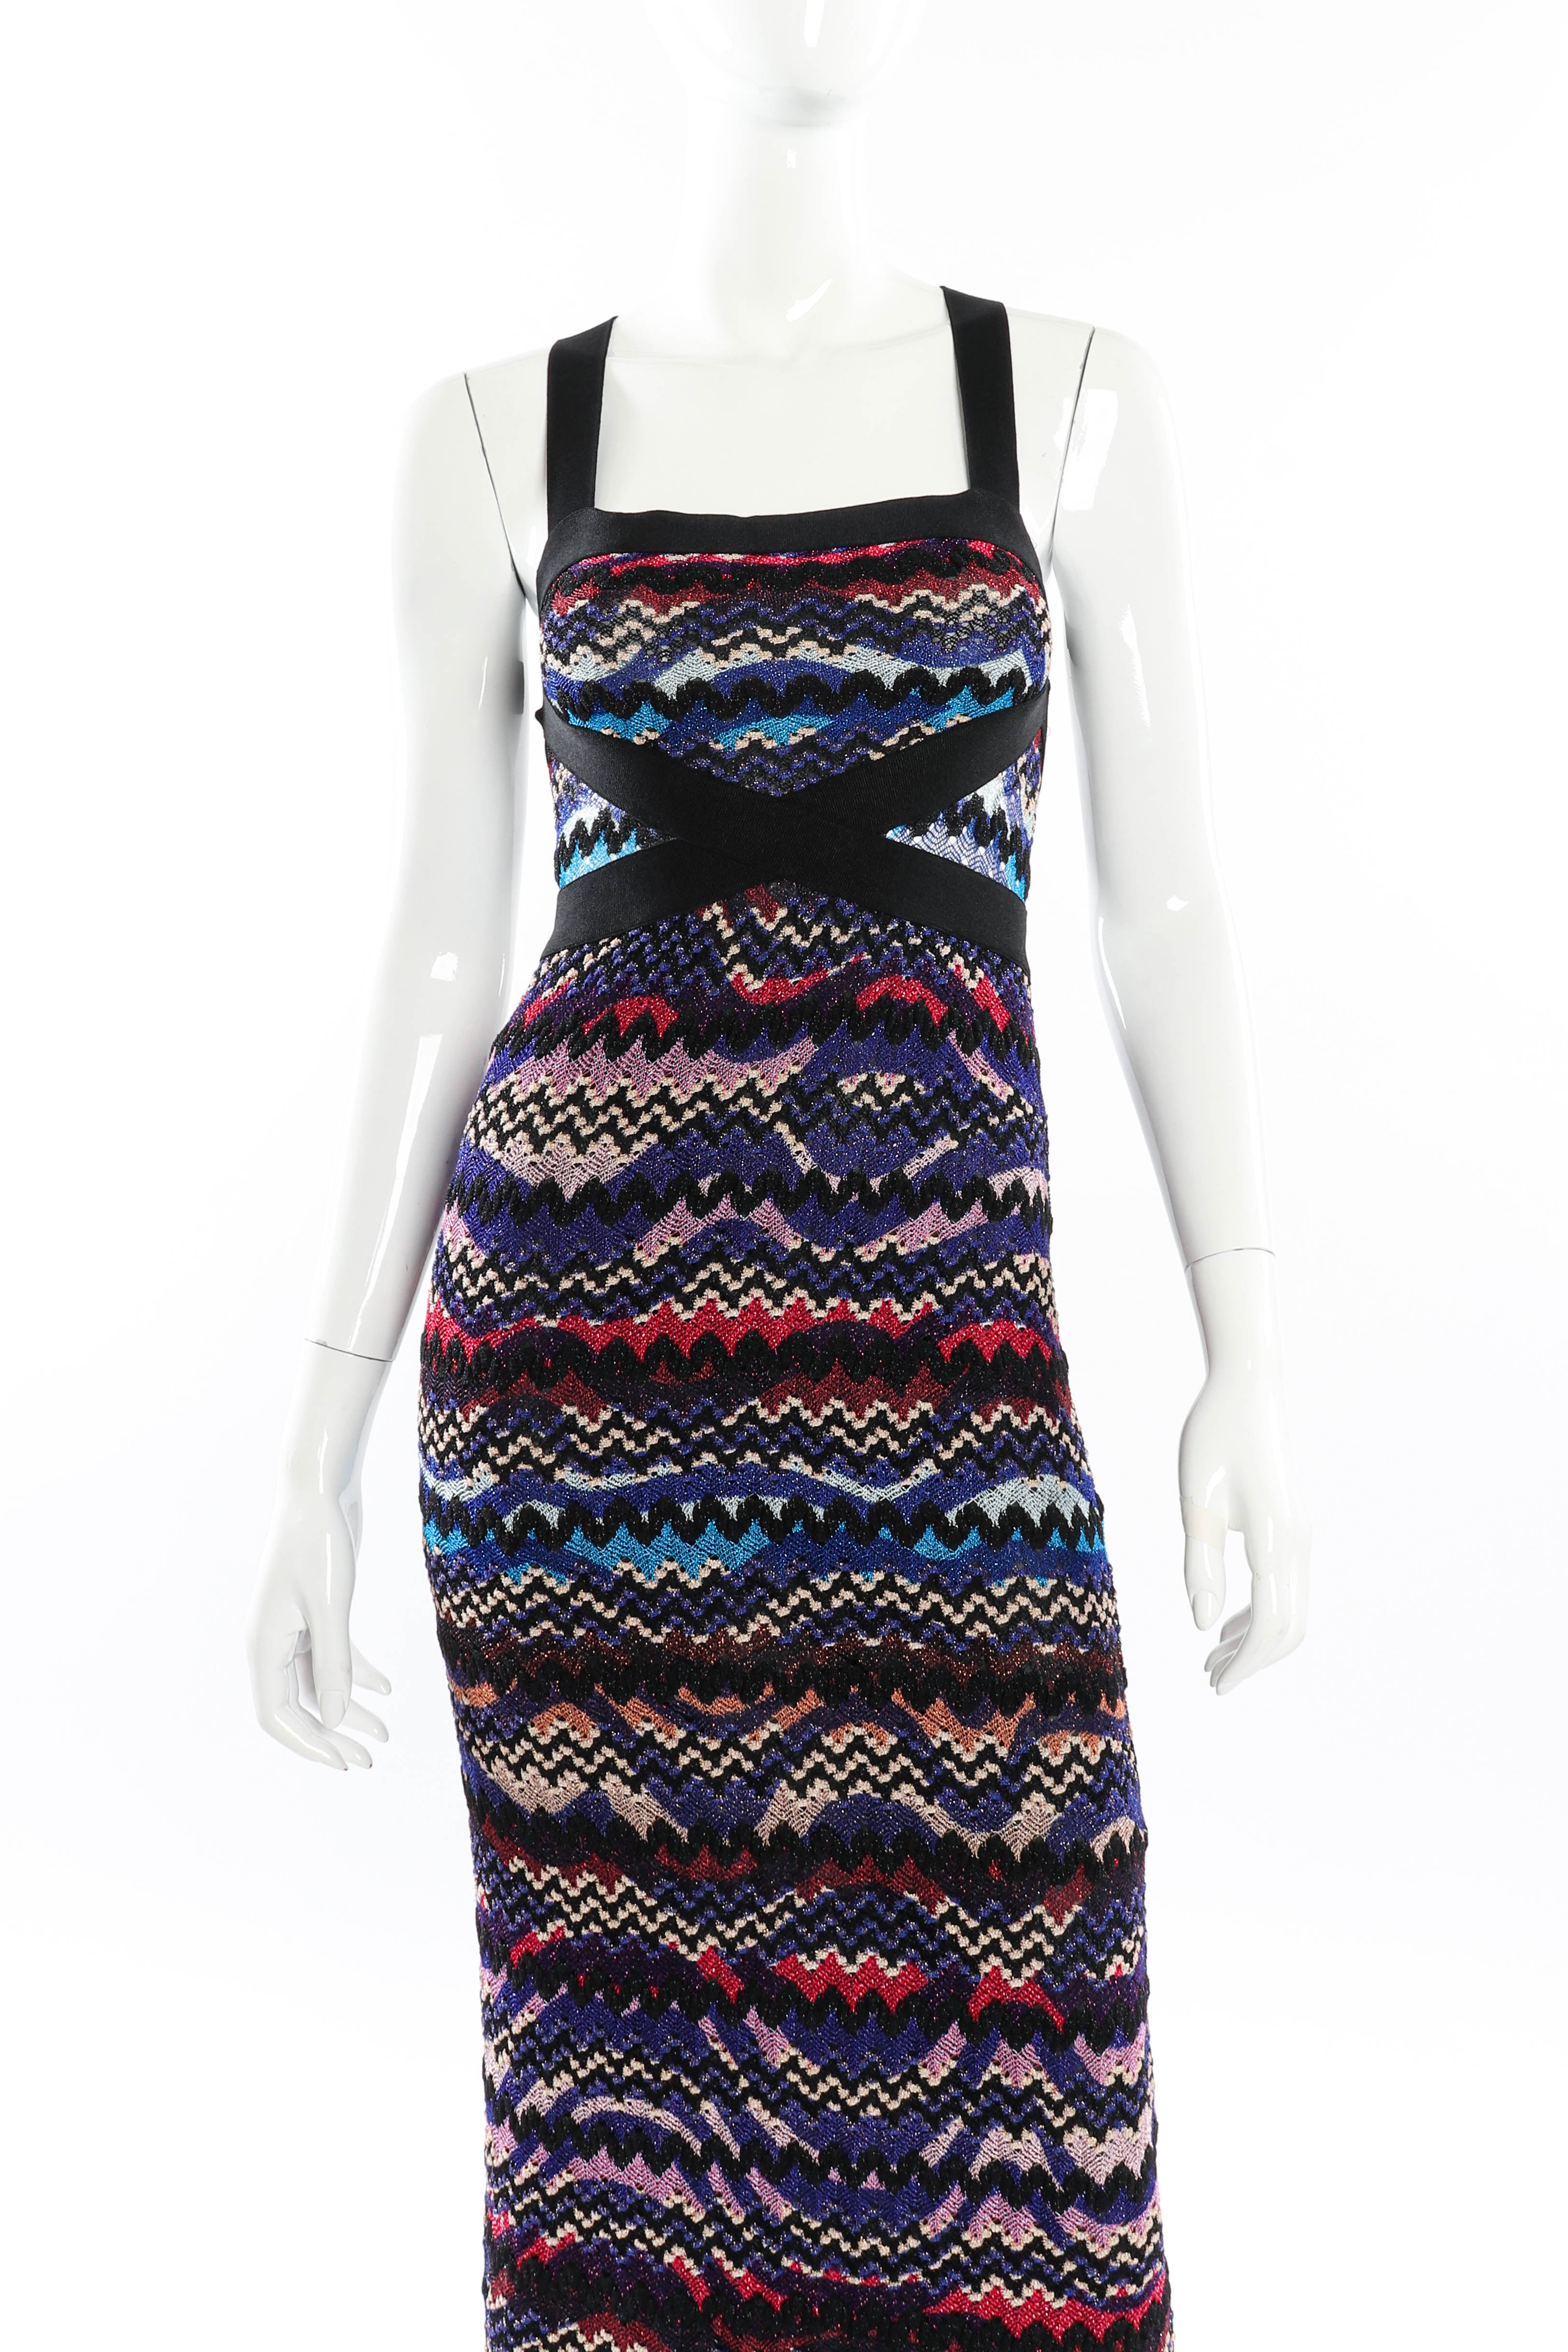 Missoni Chevron Knit Maxi Dress front on mannequin closeup @recessla